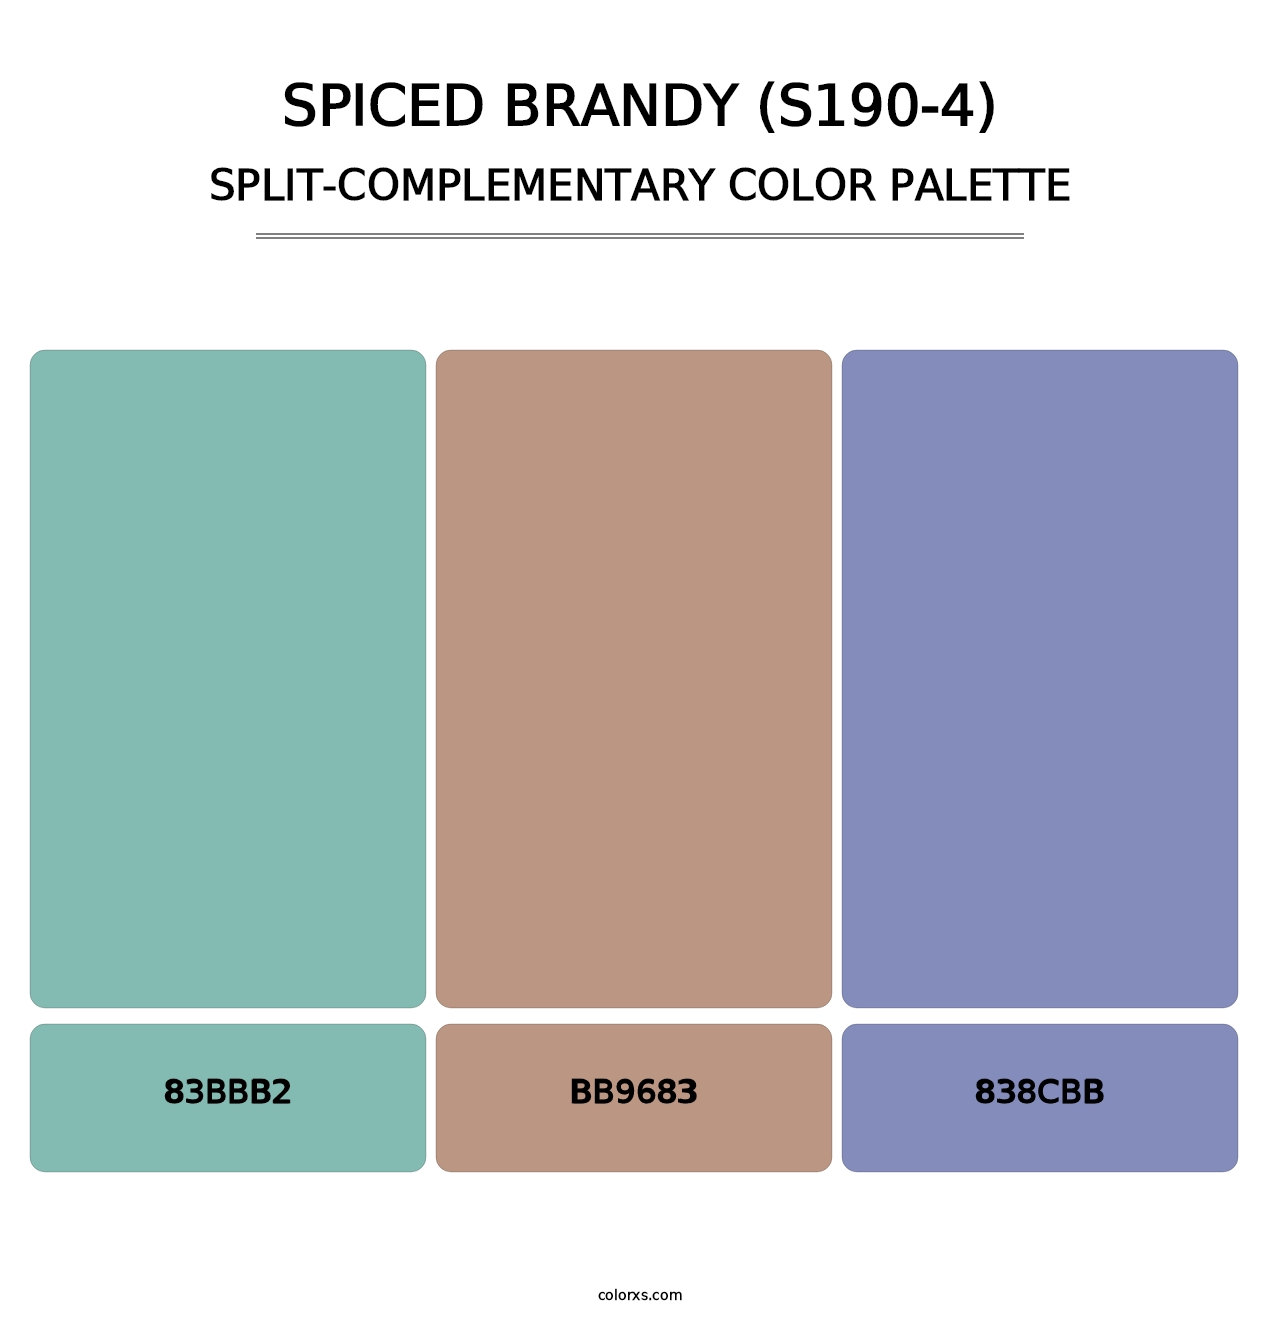 Spiced Brandy (S190-4) - Split-Complementary Color Palette